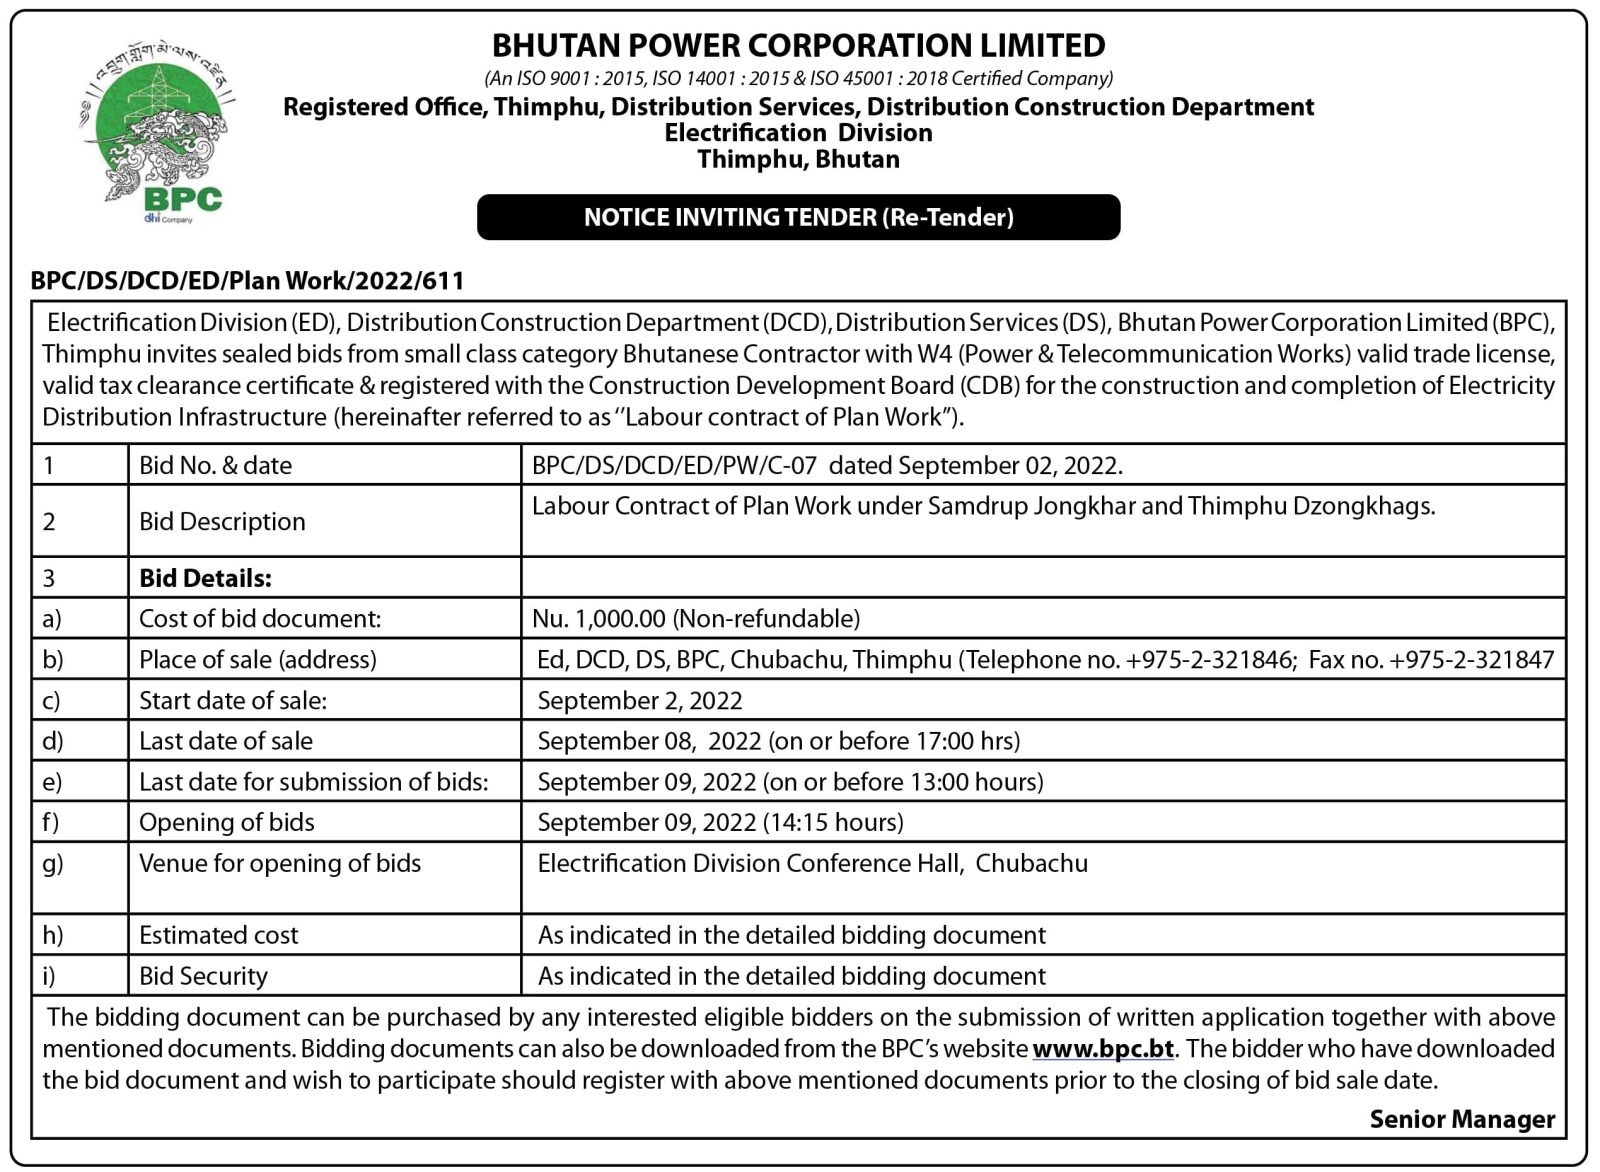 𝐍𝐨𝐭𝐢𝐜𝐞 𝐈𝐧𝐯𝐢𝐭𝐢𝐧𝐠 𝐓𝐞𝐧𝐝𝐞𝐫 (𝐑𝐞 -𝐓𝐞𝐧𝐝𝐞𝐫): Bhutan Power Corporation Limited